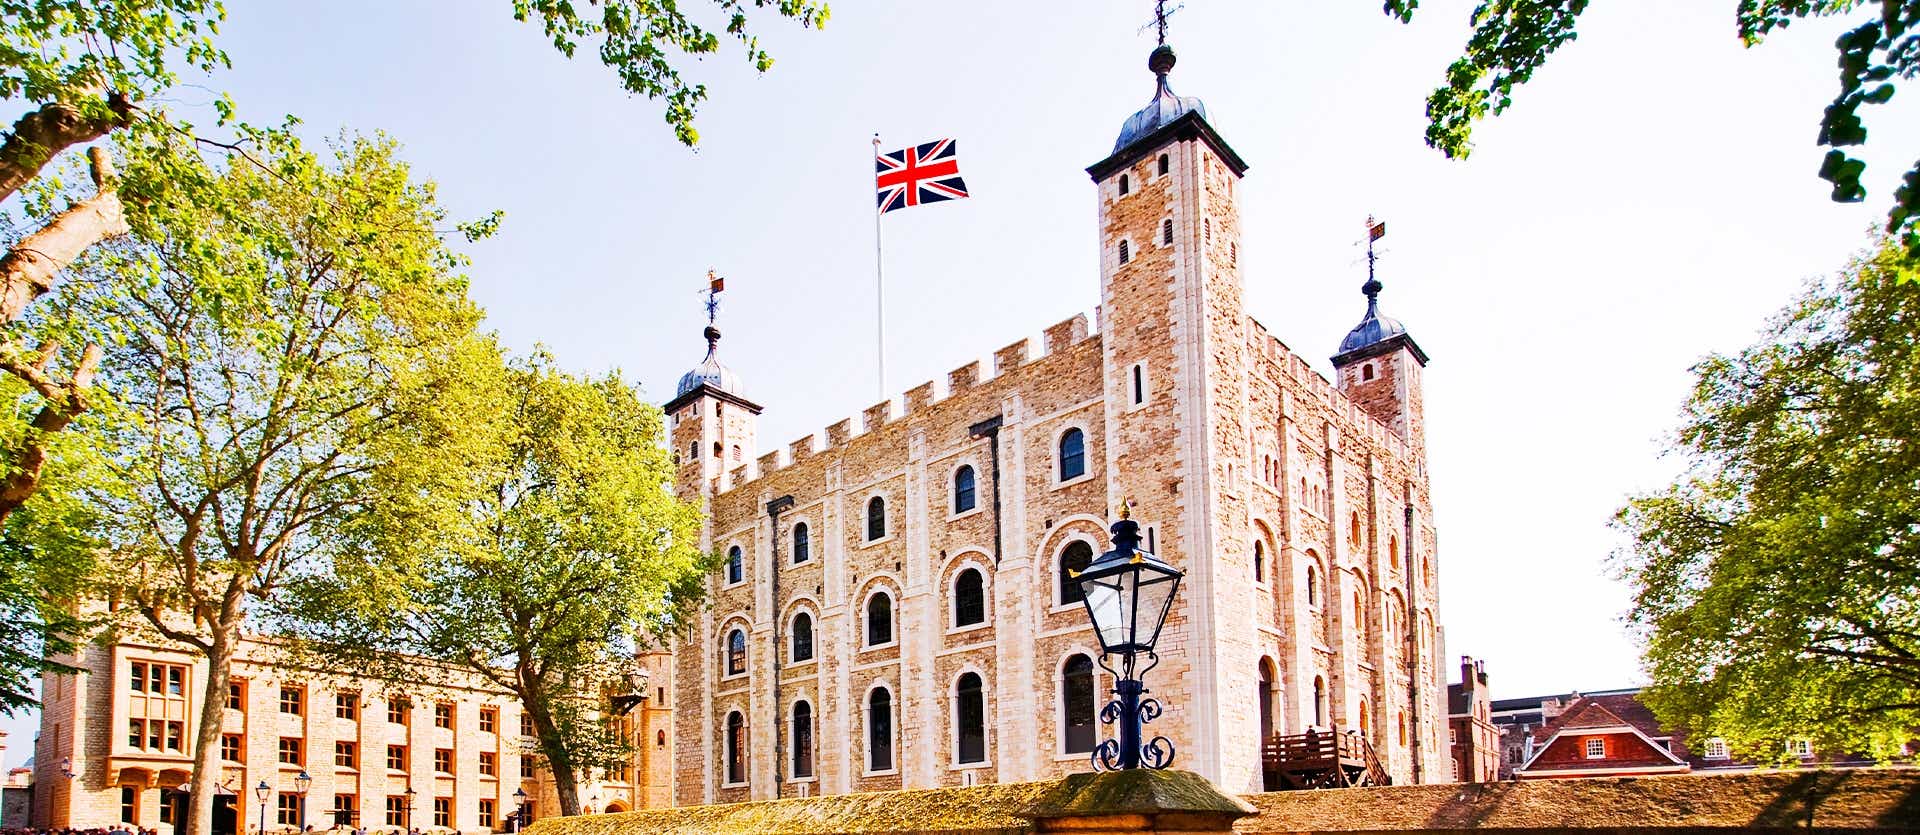 Tower of London <span class="iconos separador"></span> England